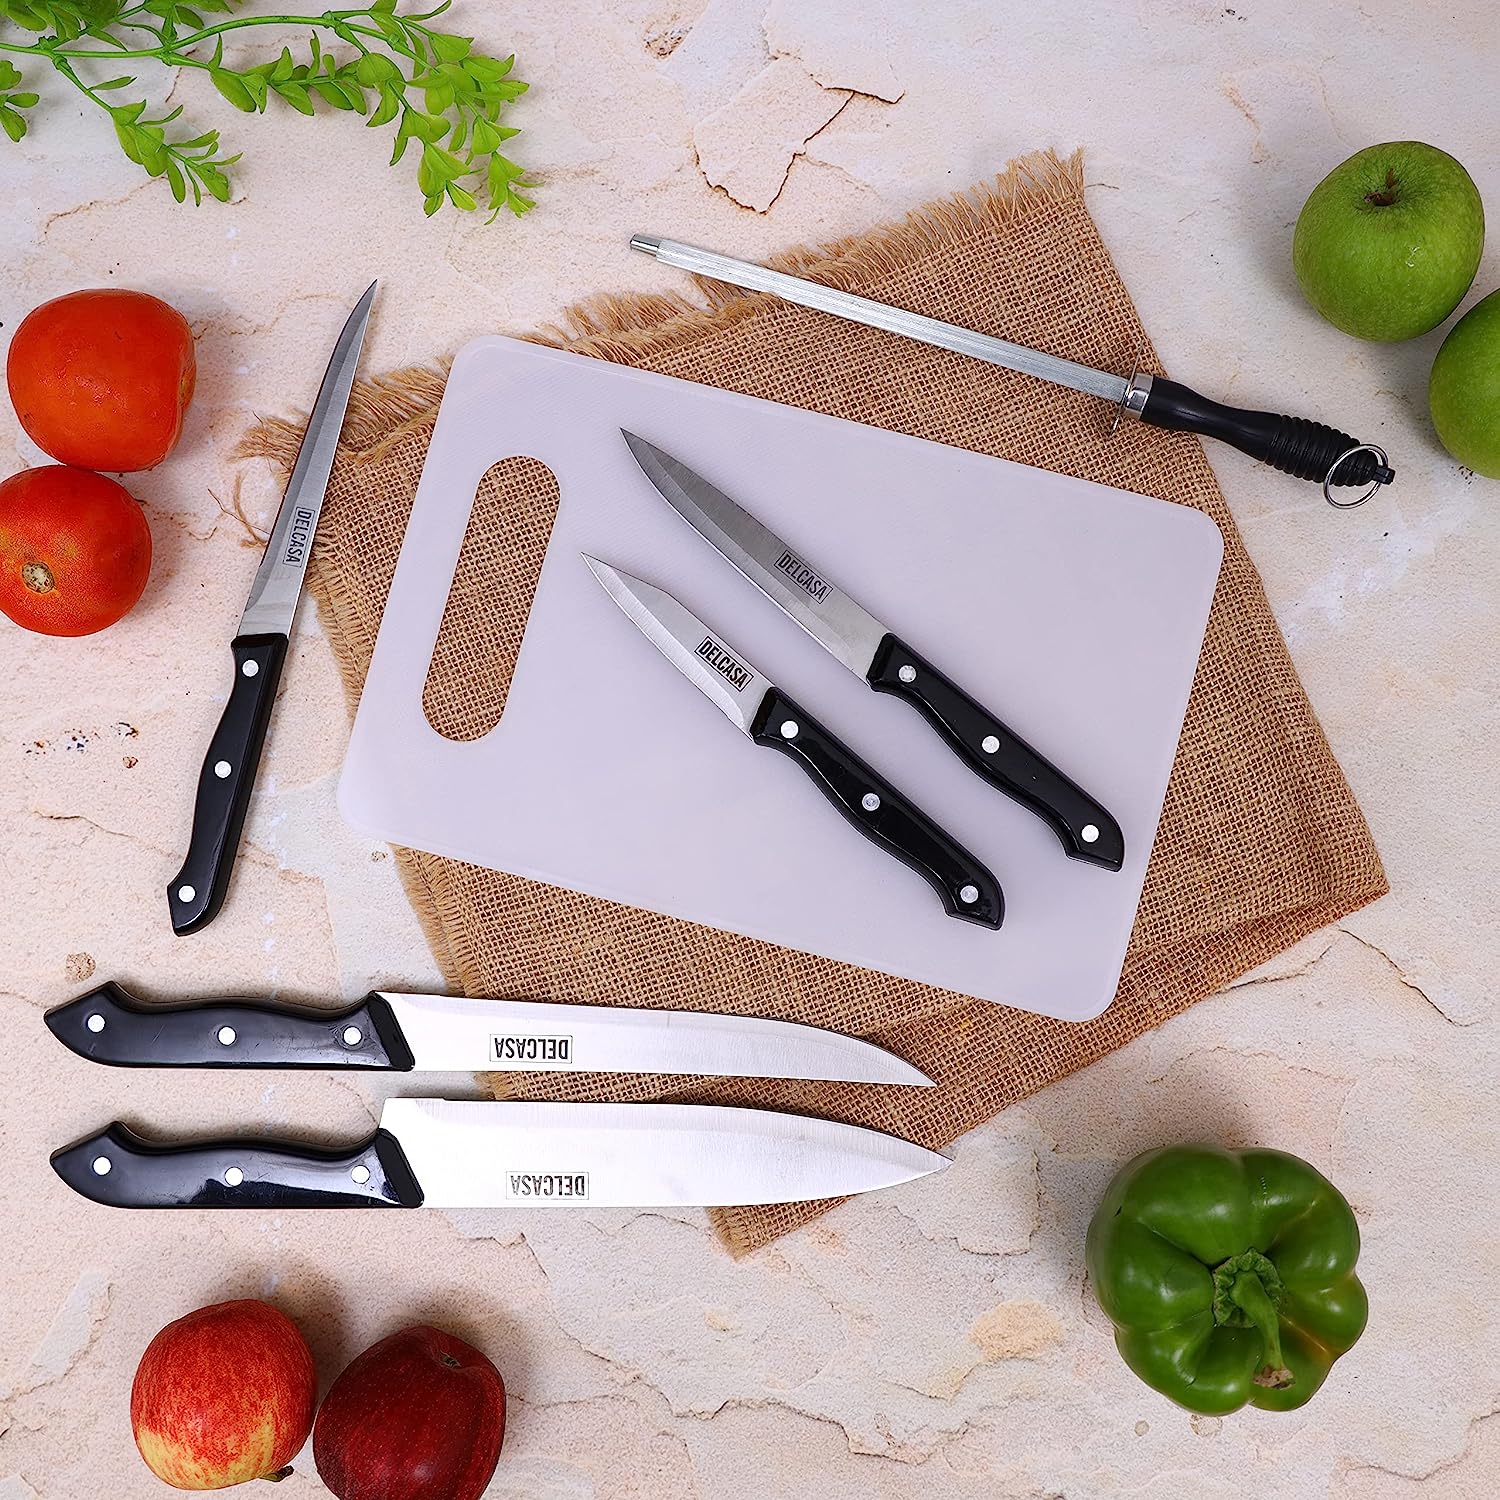 Delcasa 7 Pcs Basic Kitchen Tool Set | Best Kitchen Accessories in Bahrain | Knife Set | Halabh